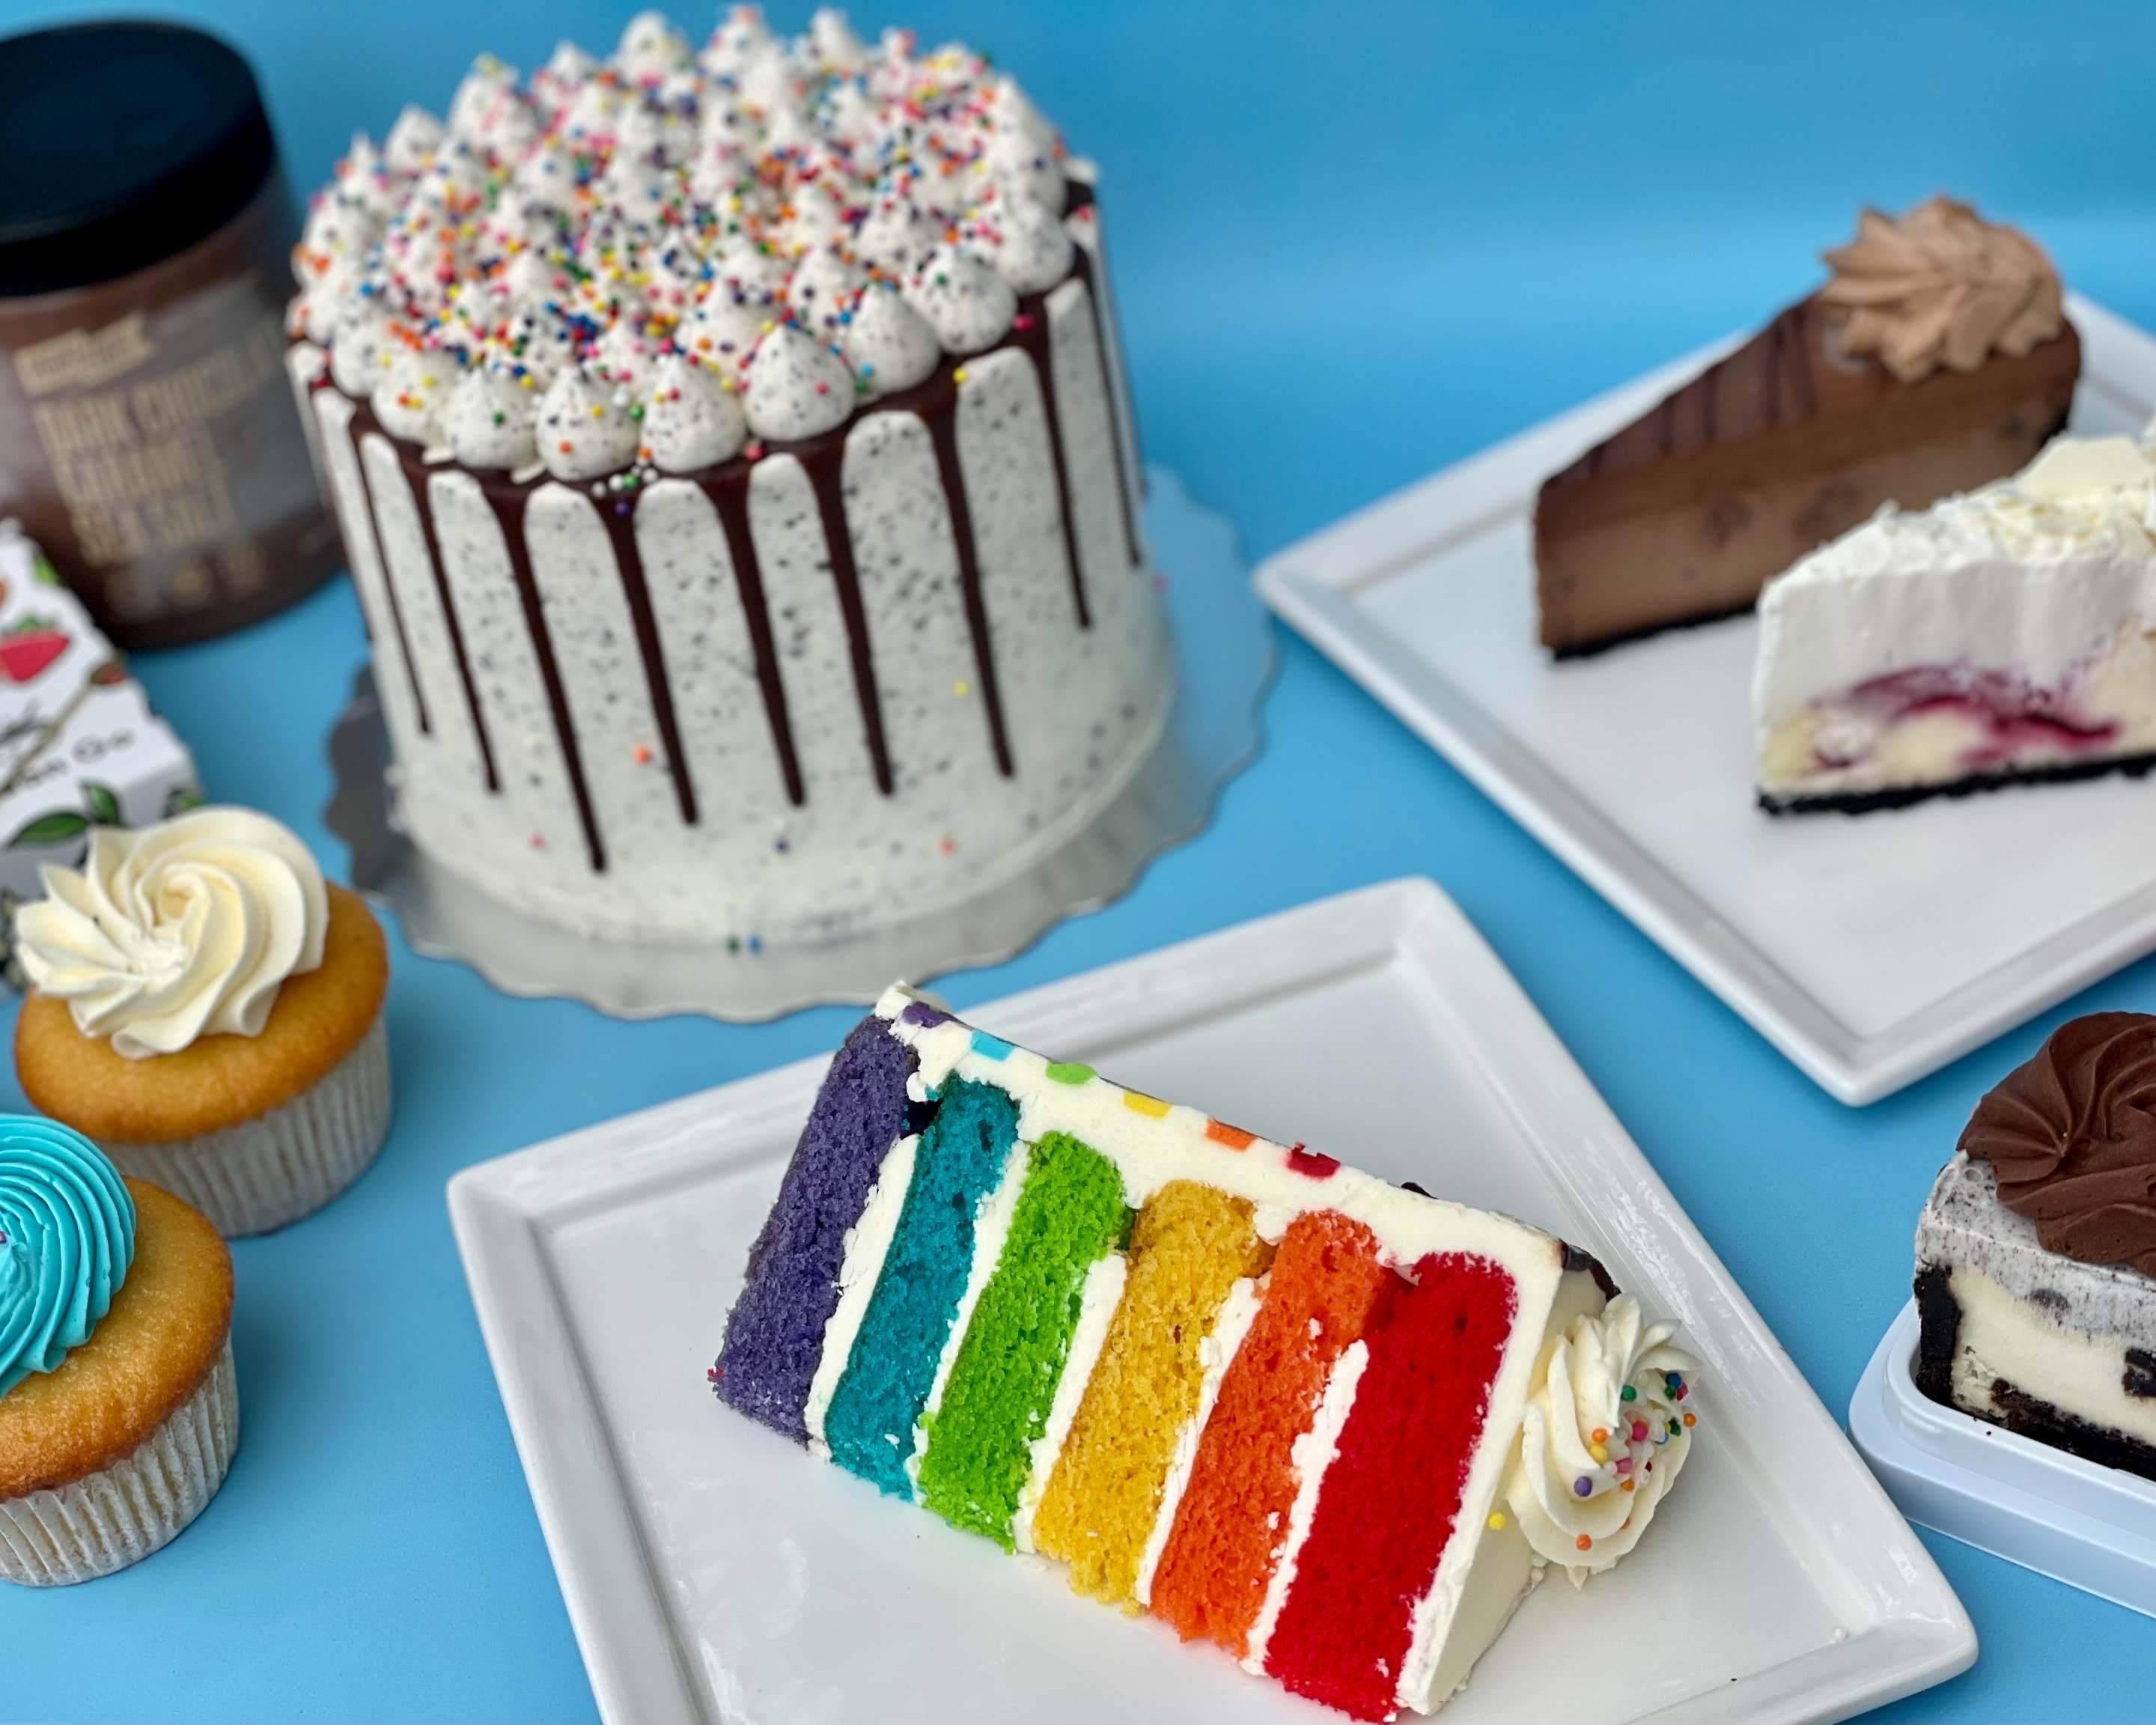 20 Best Birthday Cake Toronto Options to Feast On